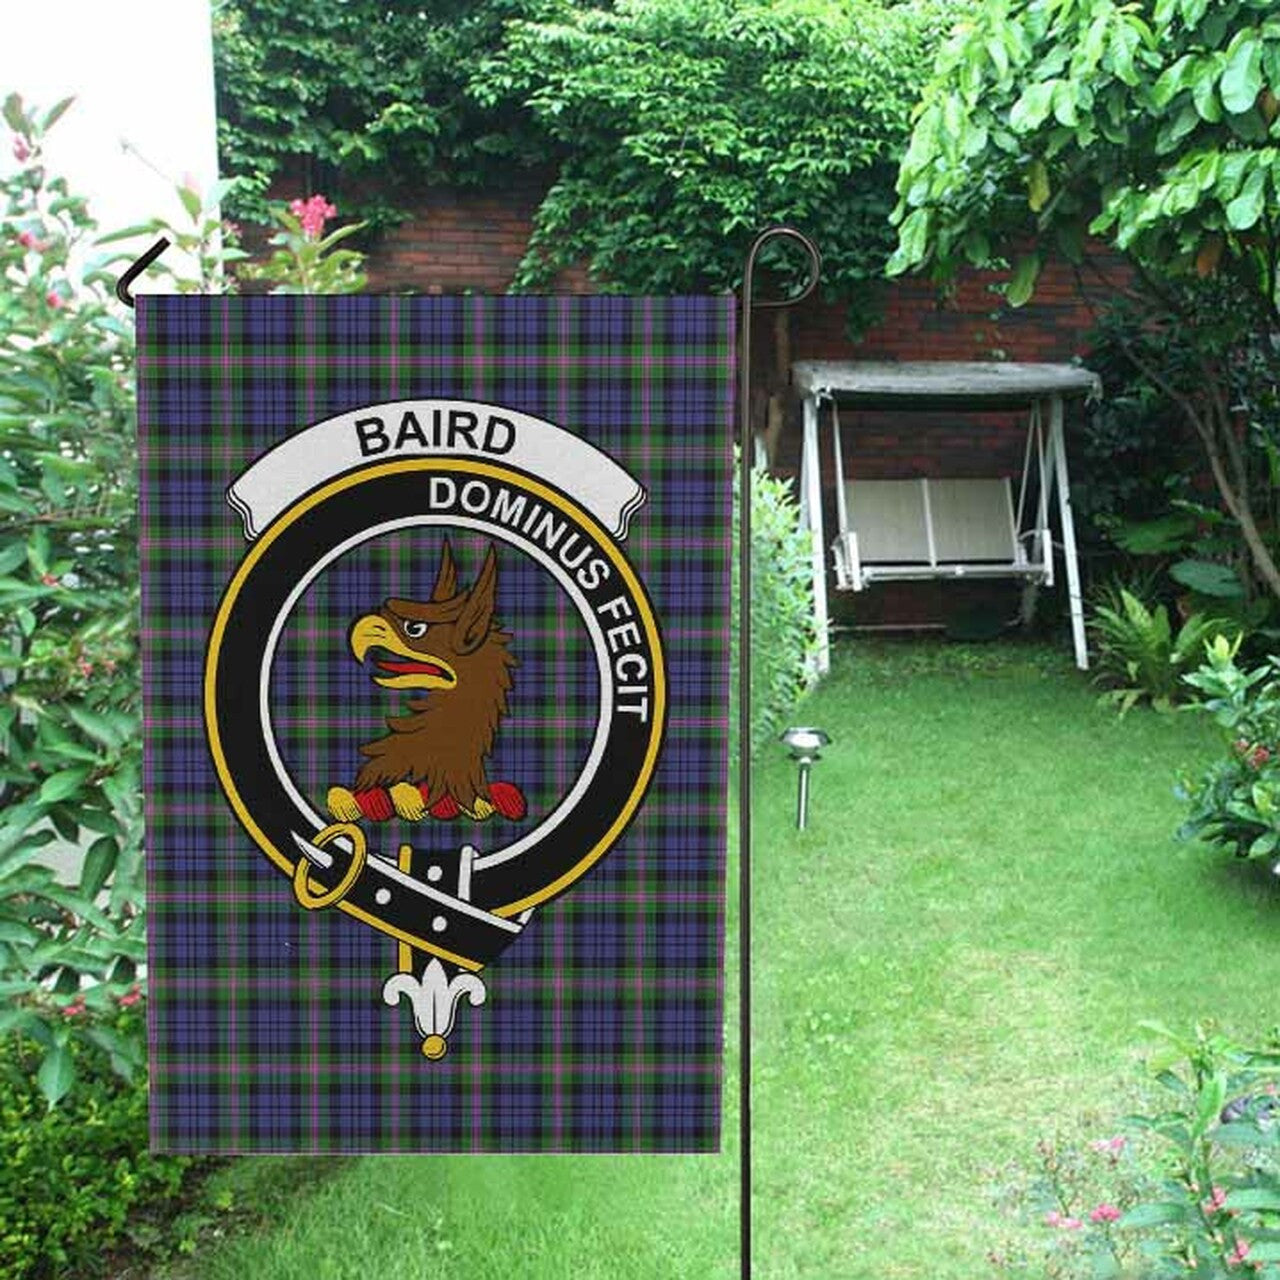 Baird Tartan Crest Garden Flag